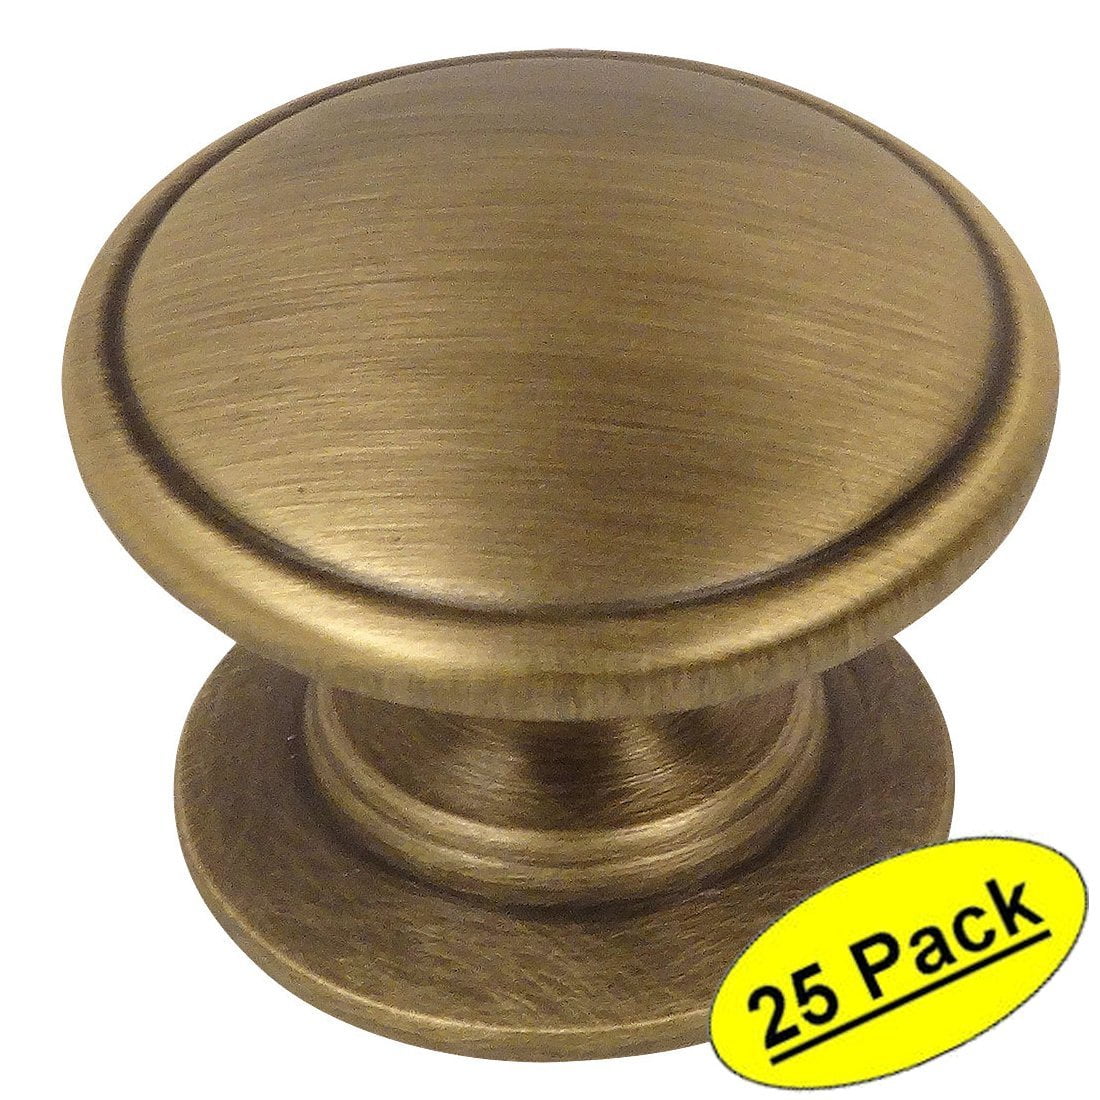 Cosmas 4950BAB Brushed Antique Brass Cabinet Hardware Round Mushroom Knob 10 Pack 1-1/4 Diameter